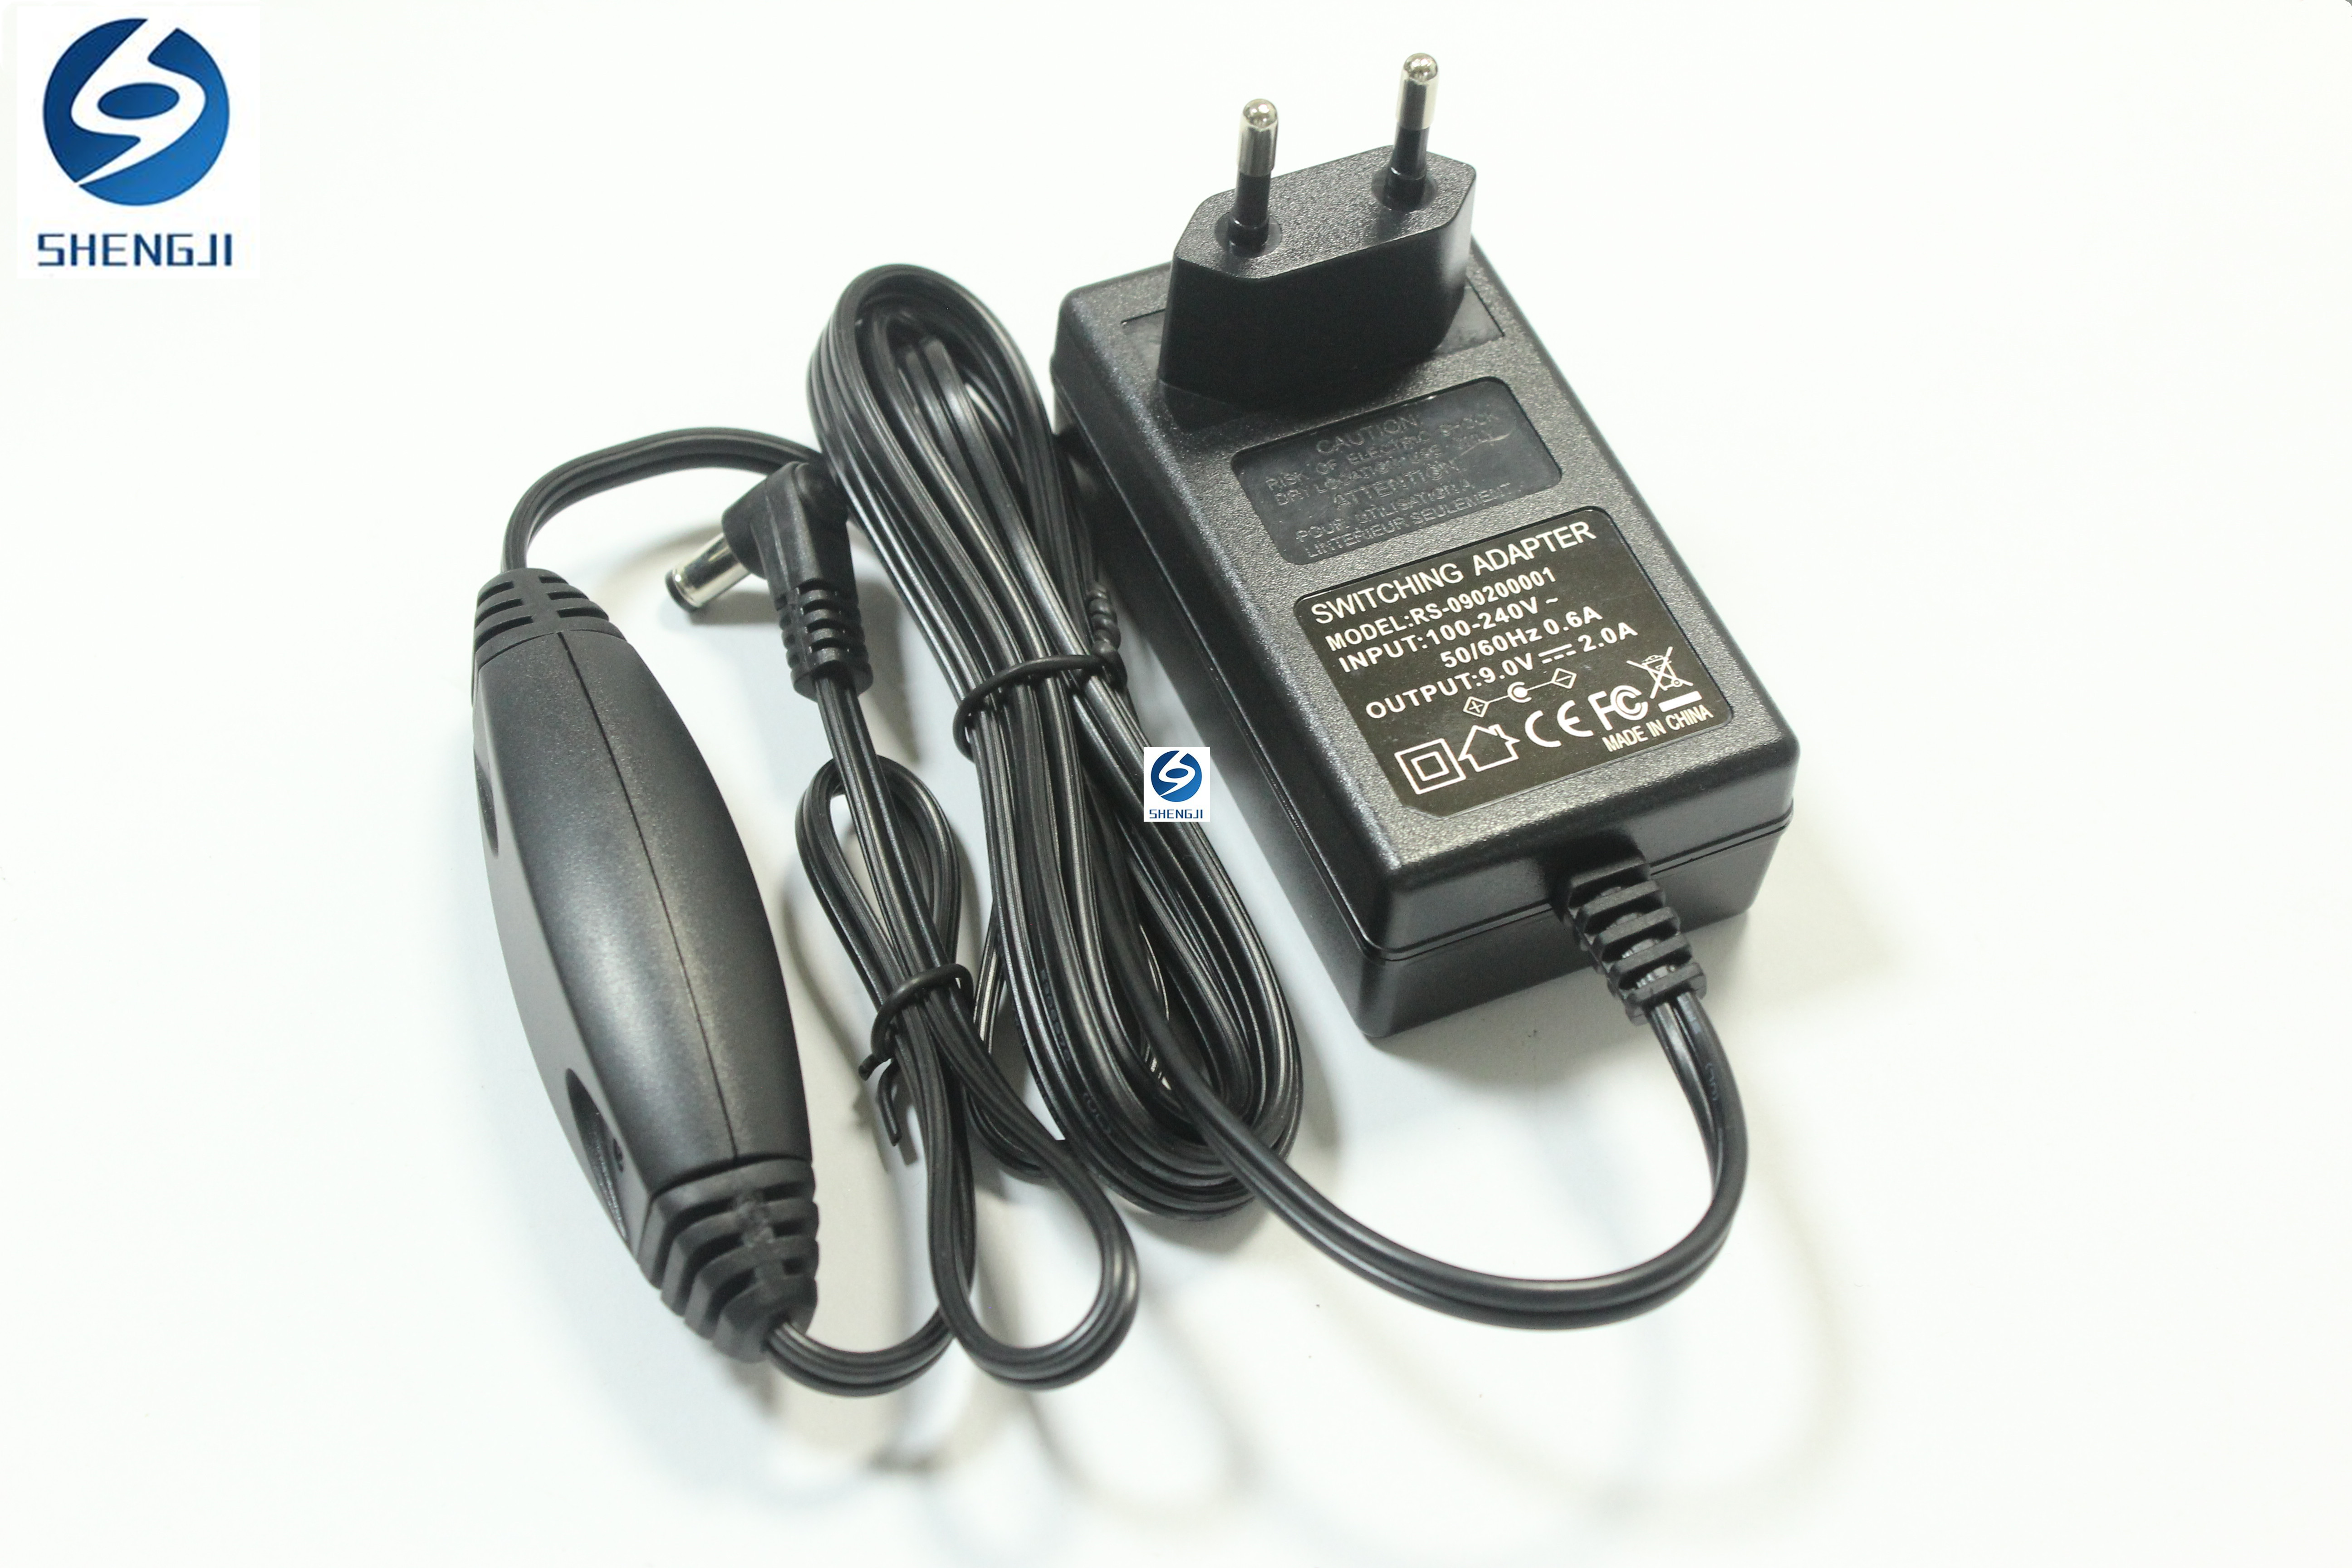 18w-24w Musical power adapter